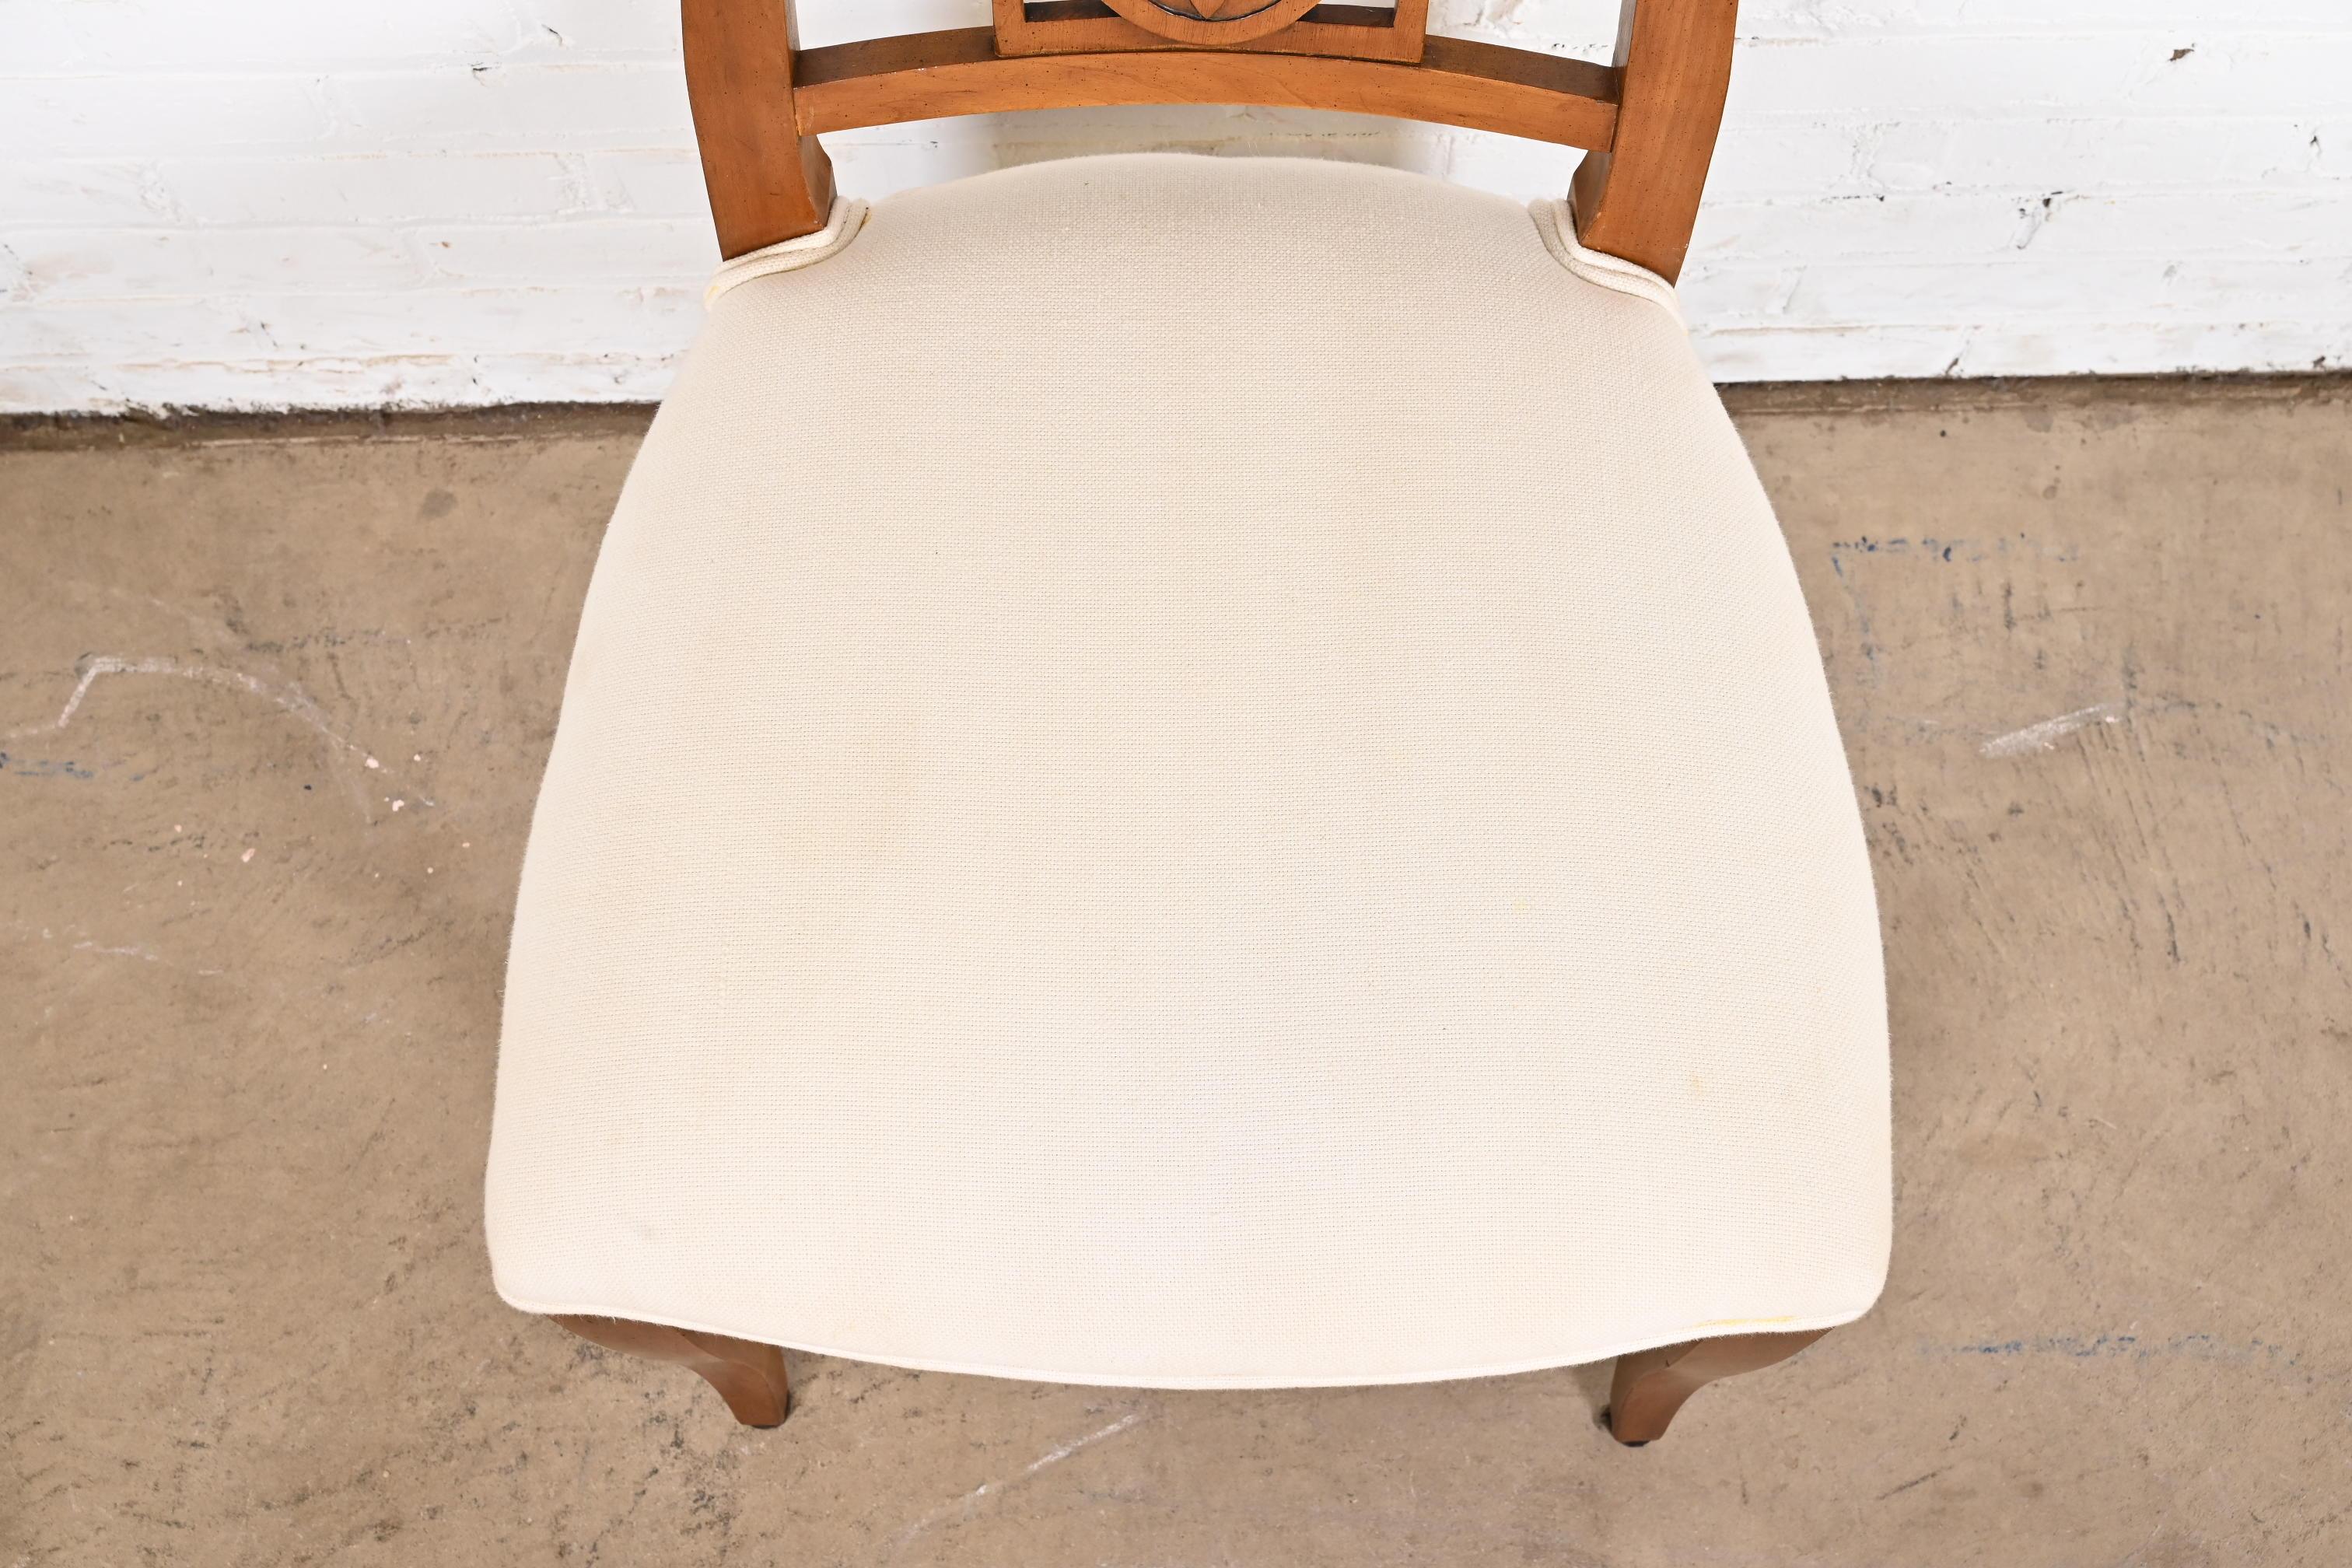 Kindel Furniture Regency Carved Fruitwood Dining Chairs, Set of Four For Sale 2